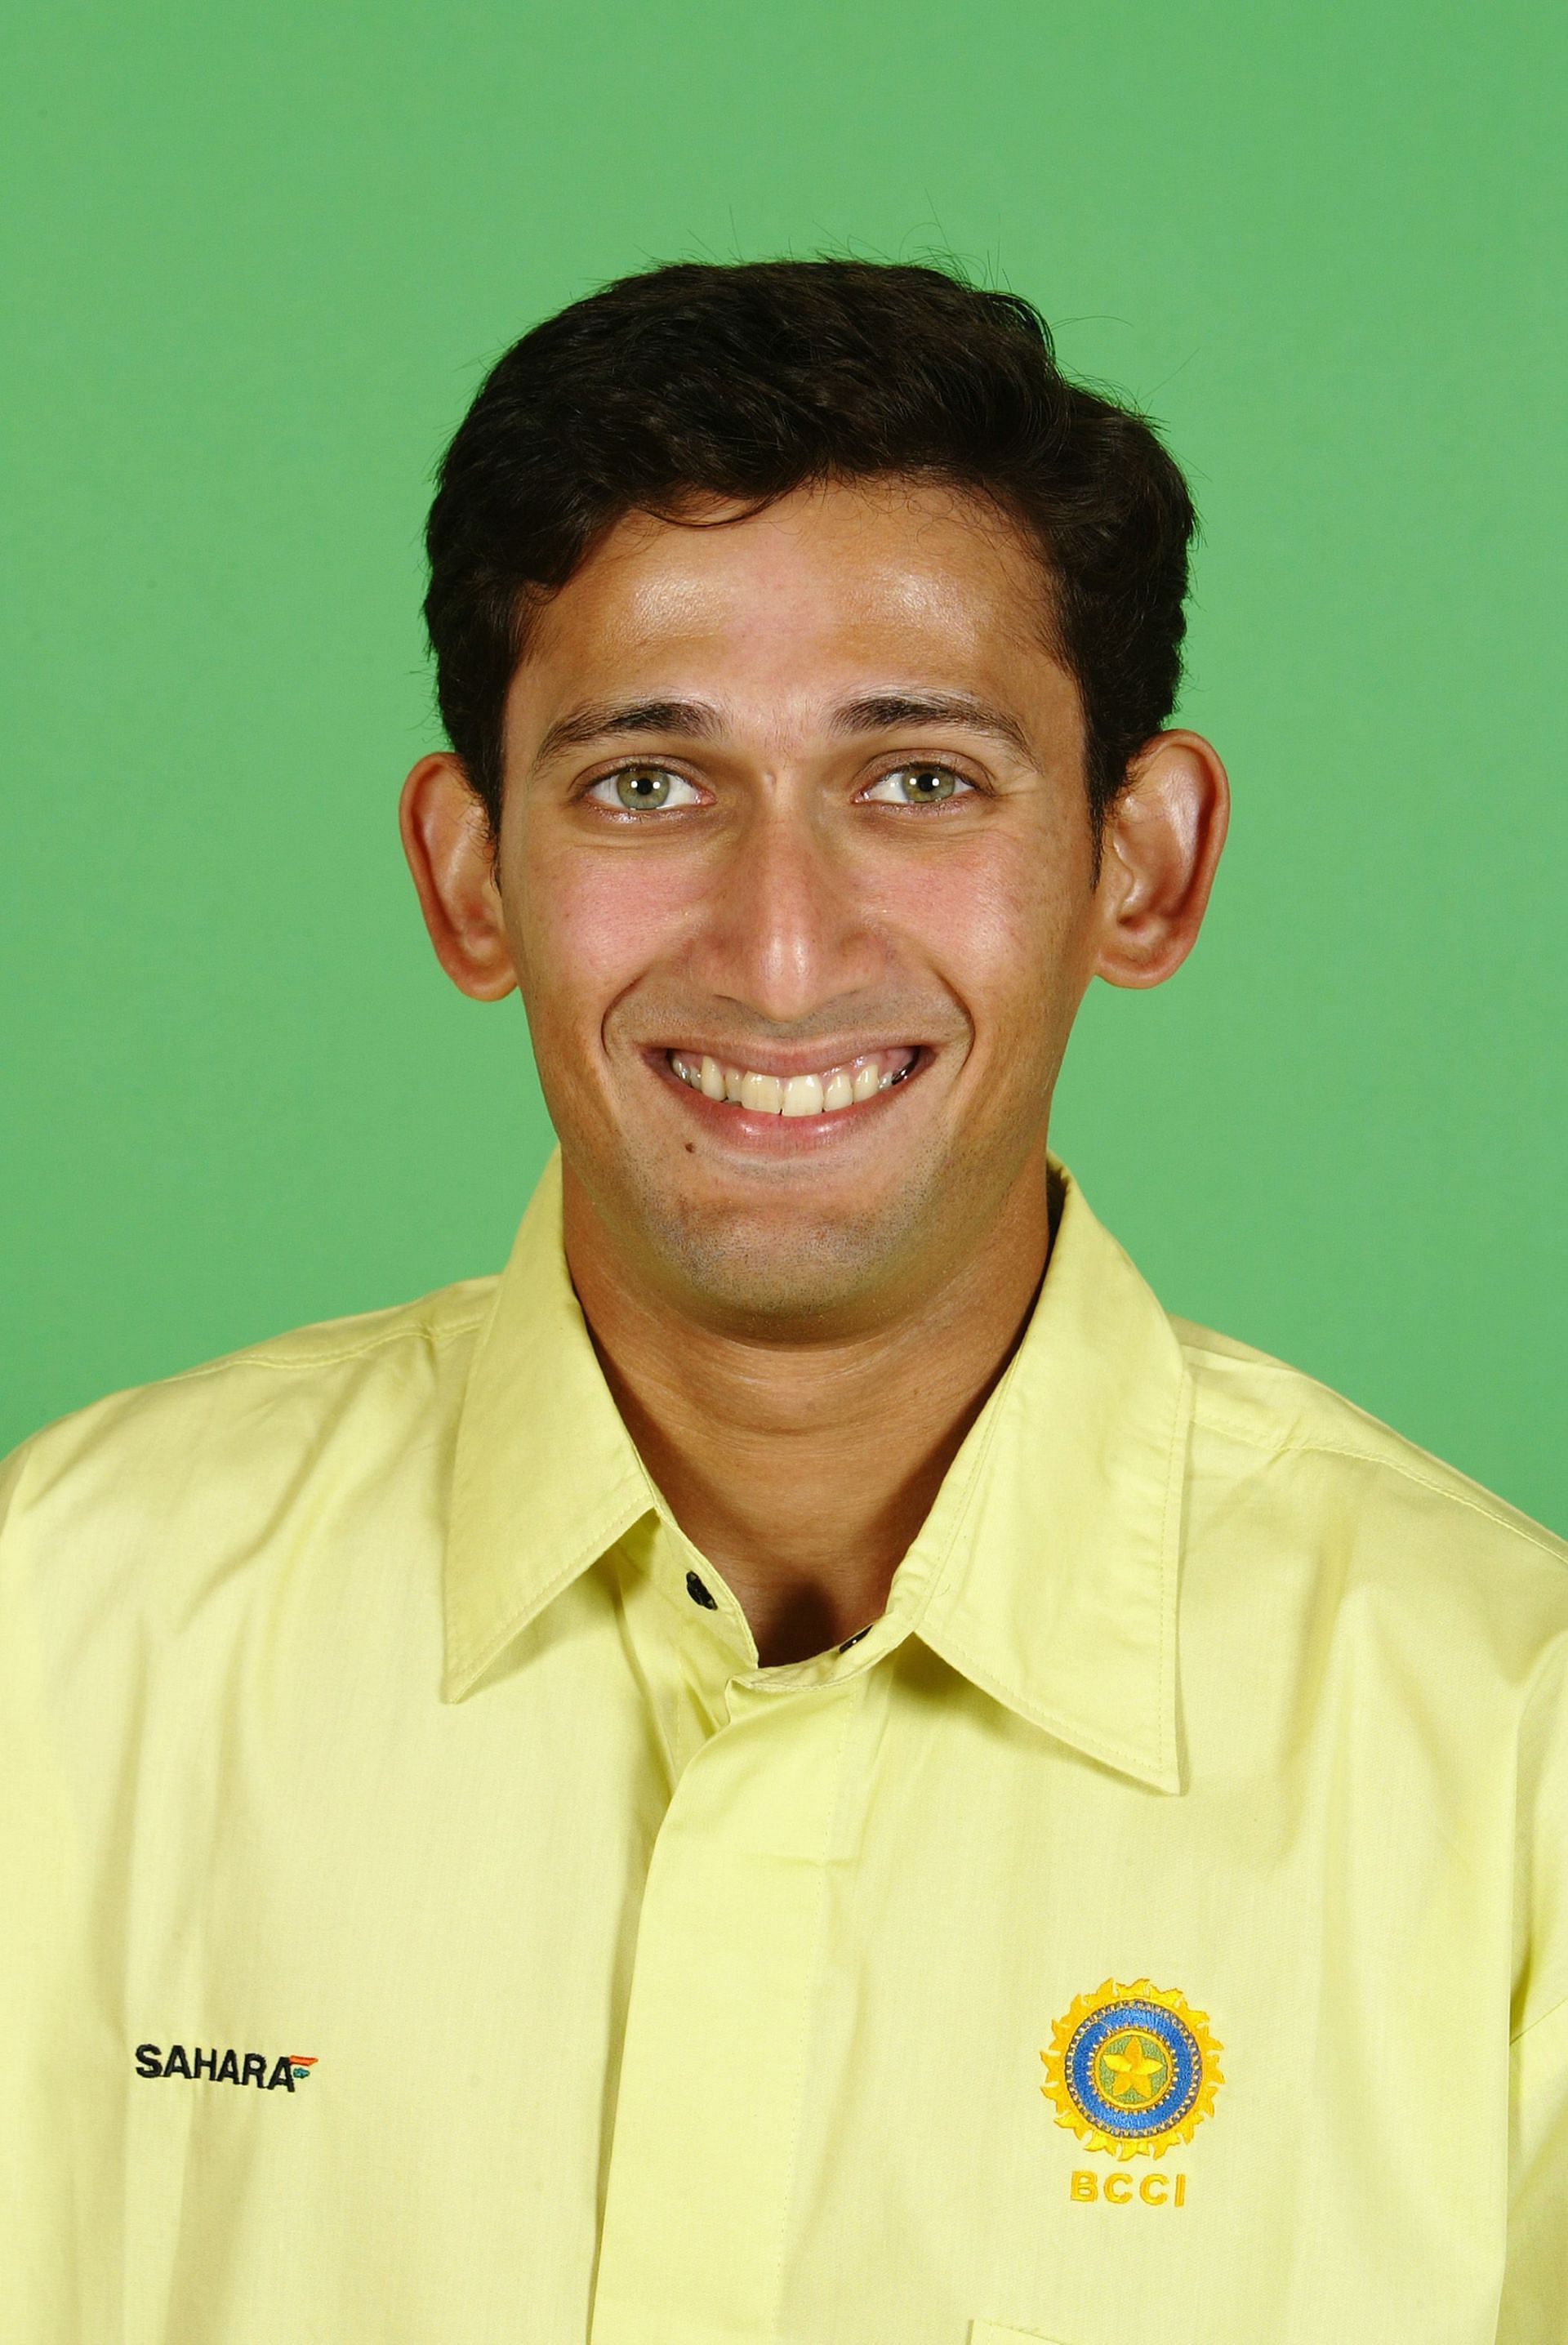 Ajit Agarkar played a pivotal role in Mumbai's victory over Karnataka in the 2009/10 Ranji Trophy Final